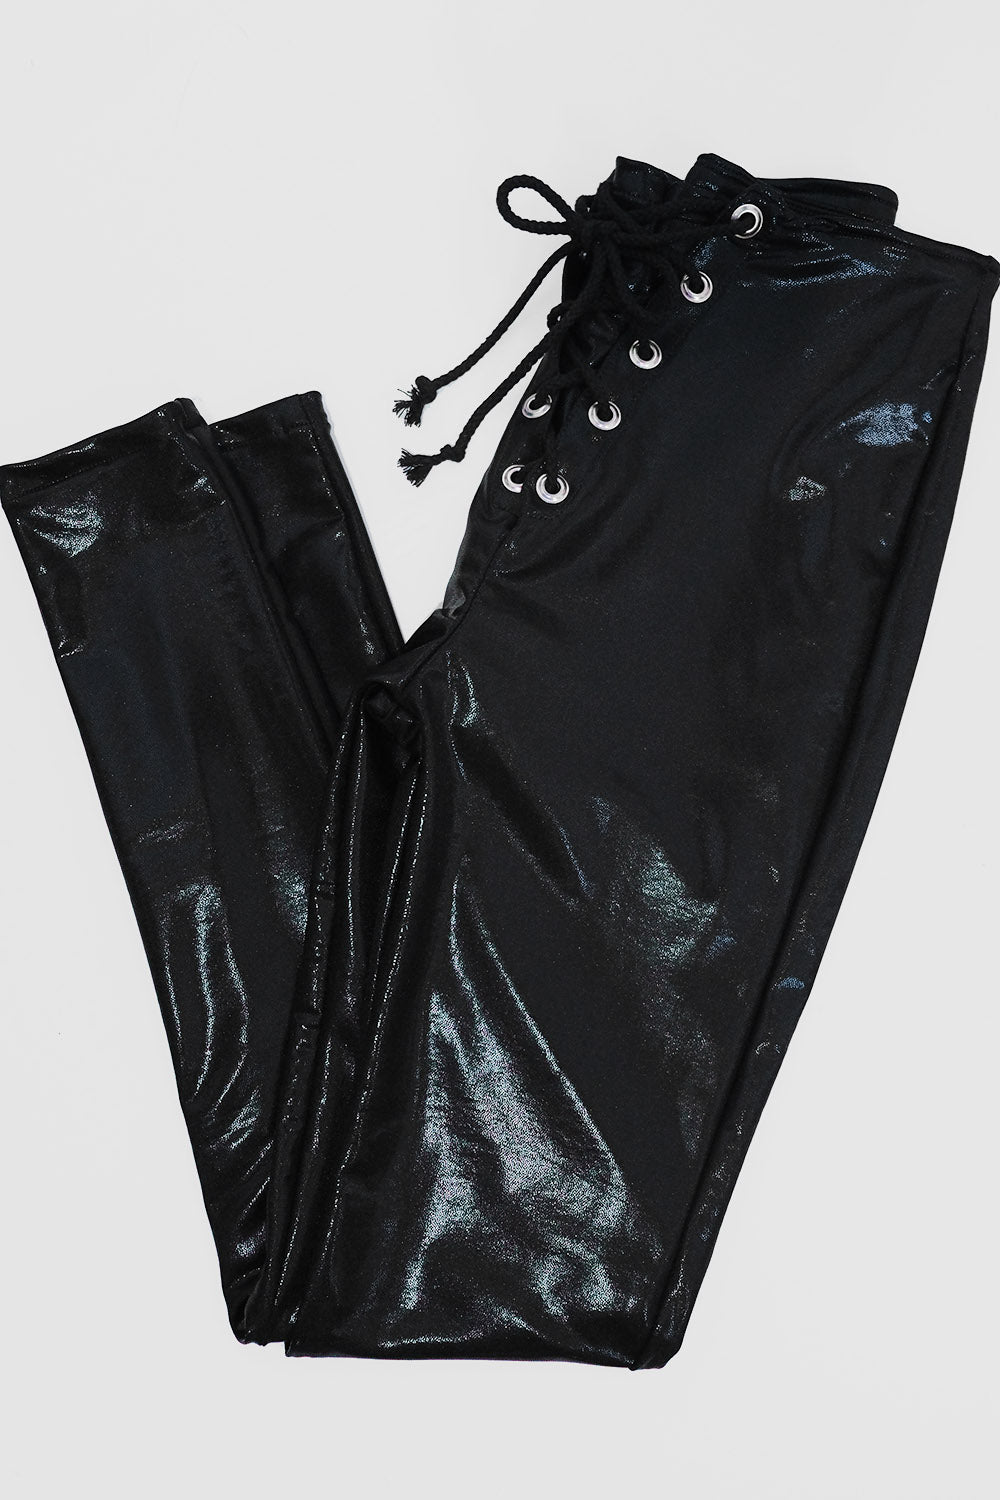 Liquid Onyx Grommet Pants | Made To Order